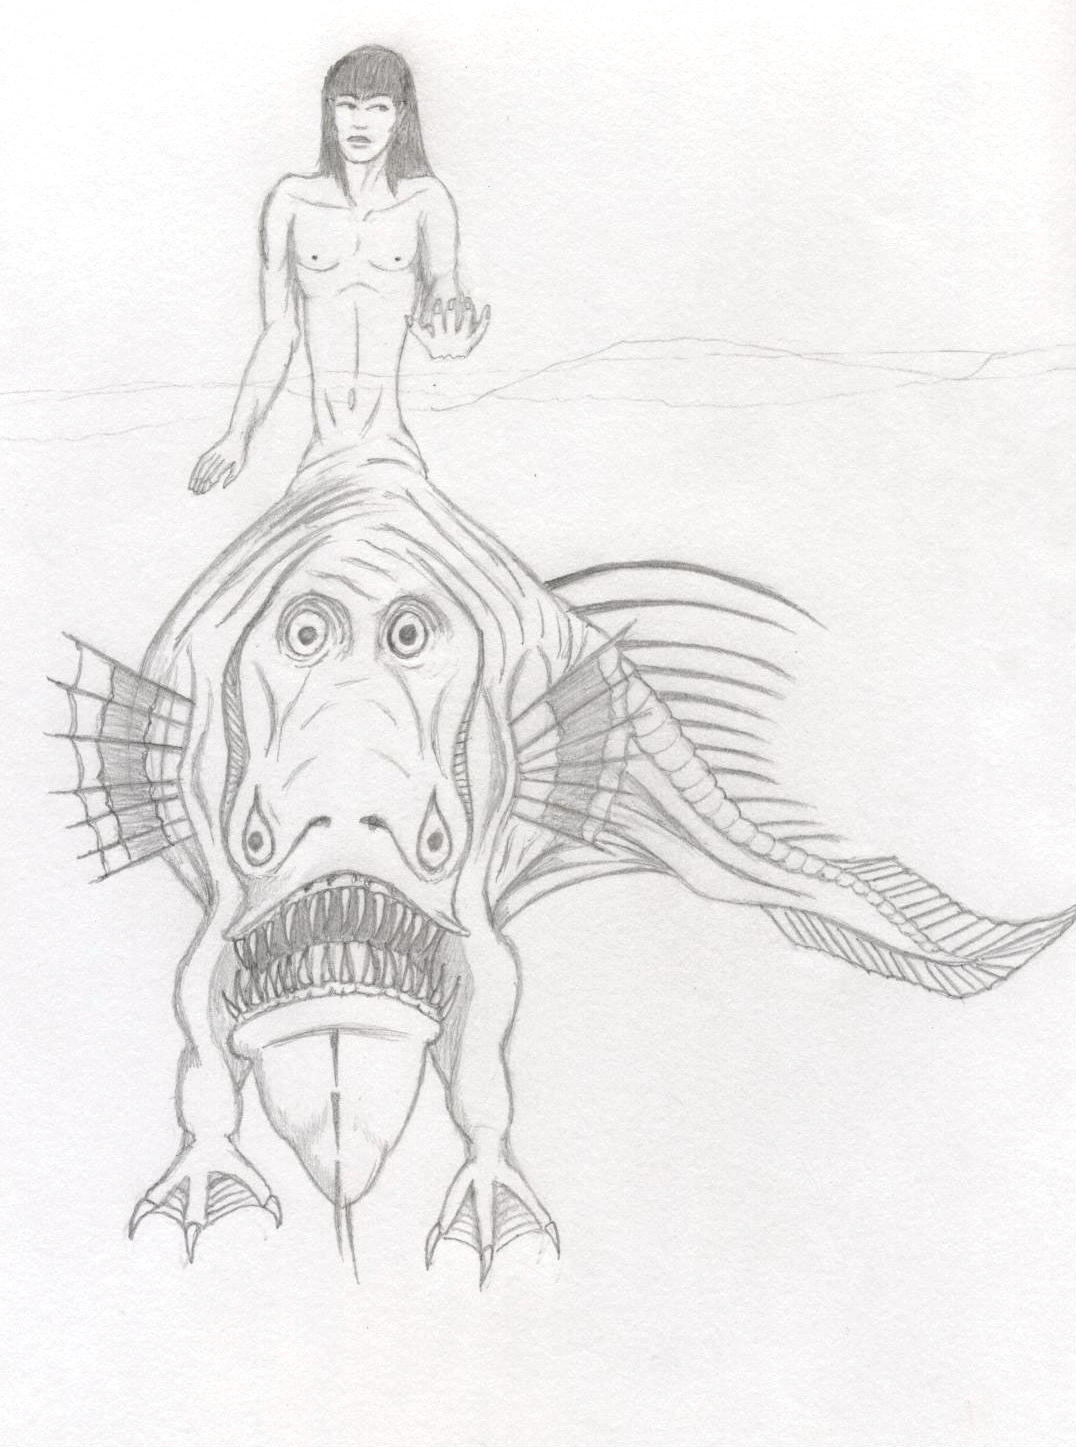 Strange Creature 1, Anglerfish, close-up by Ran_The_Hyena